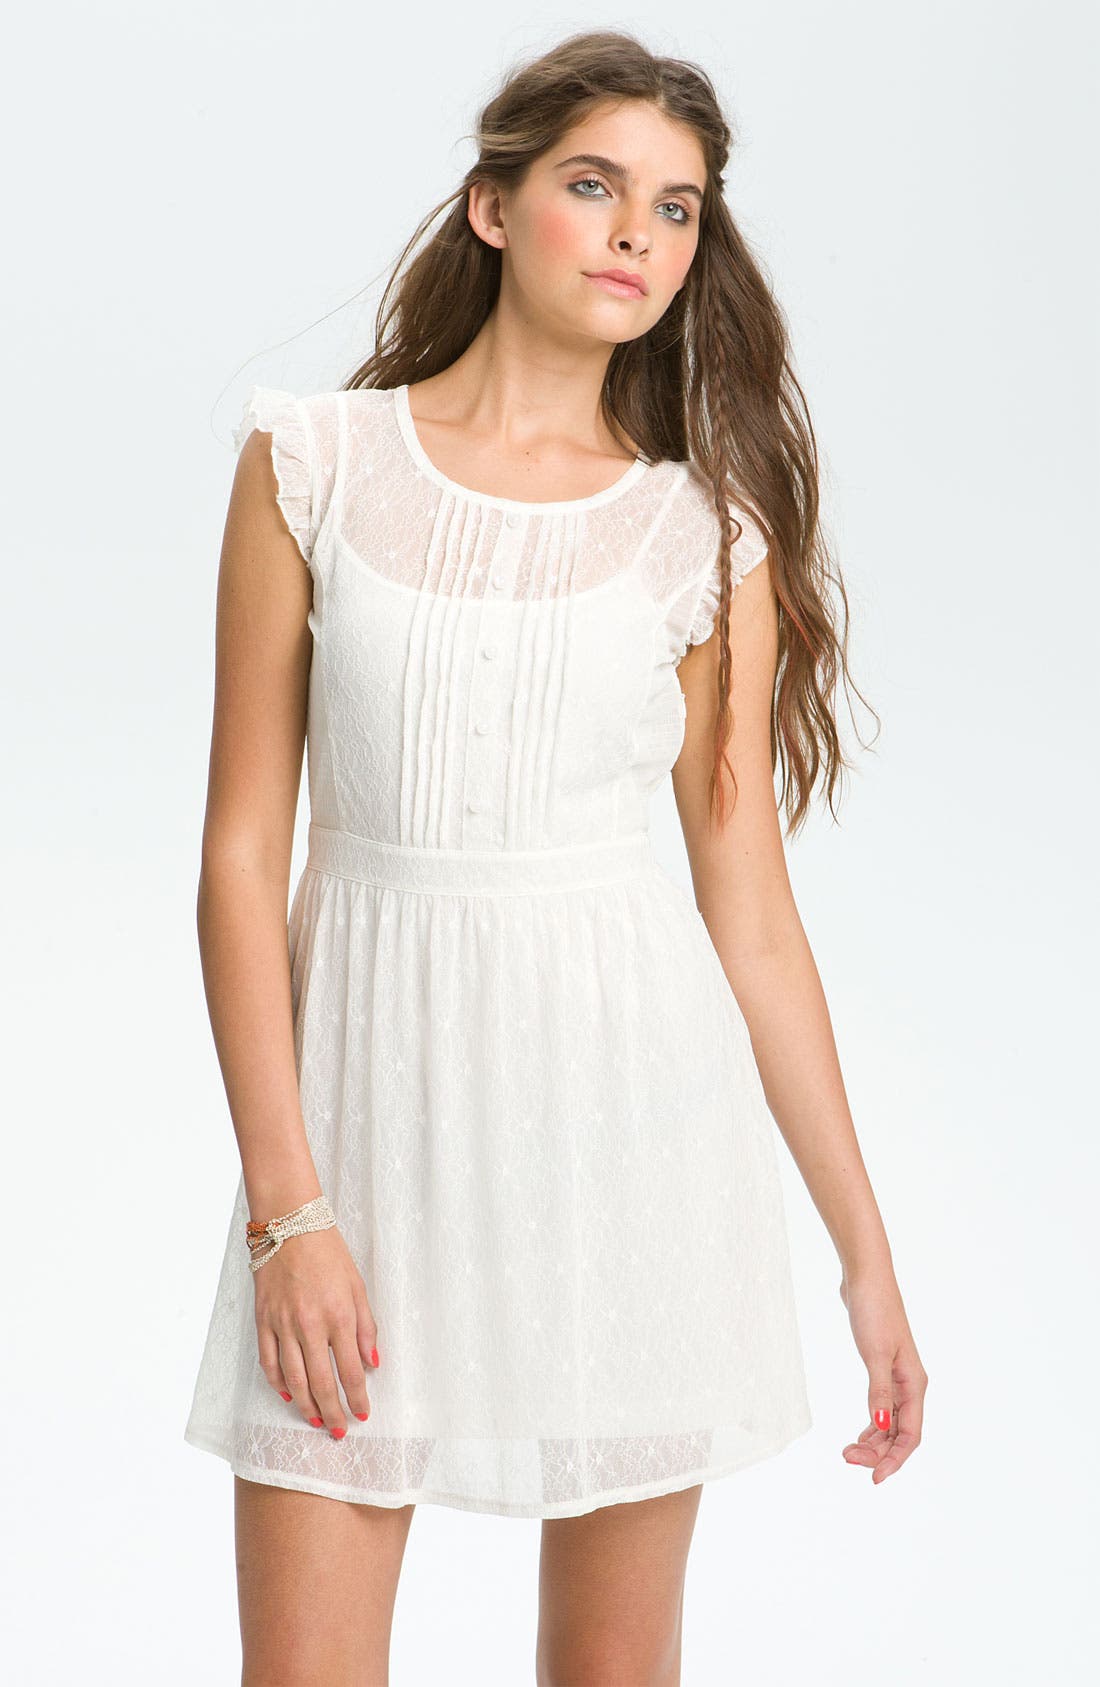 casual white dresses for juniors